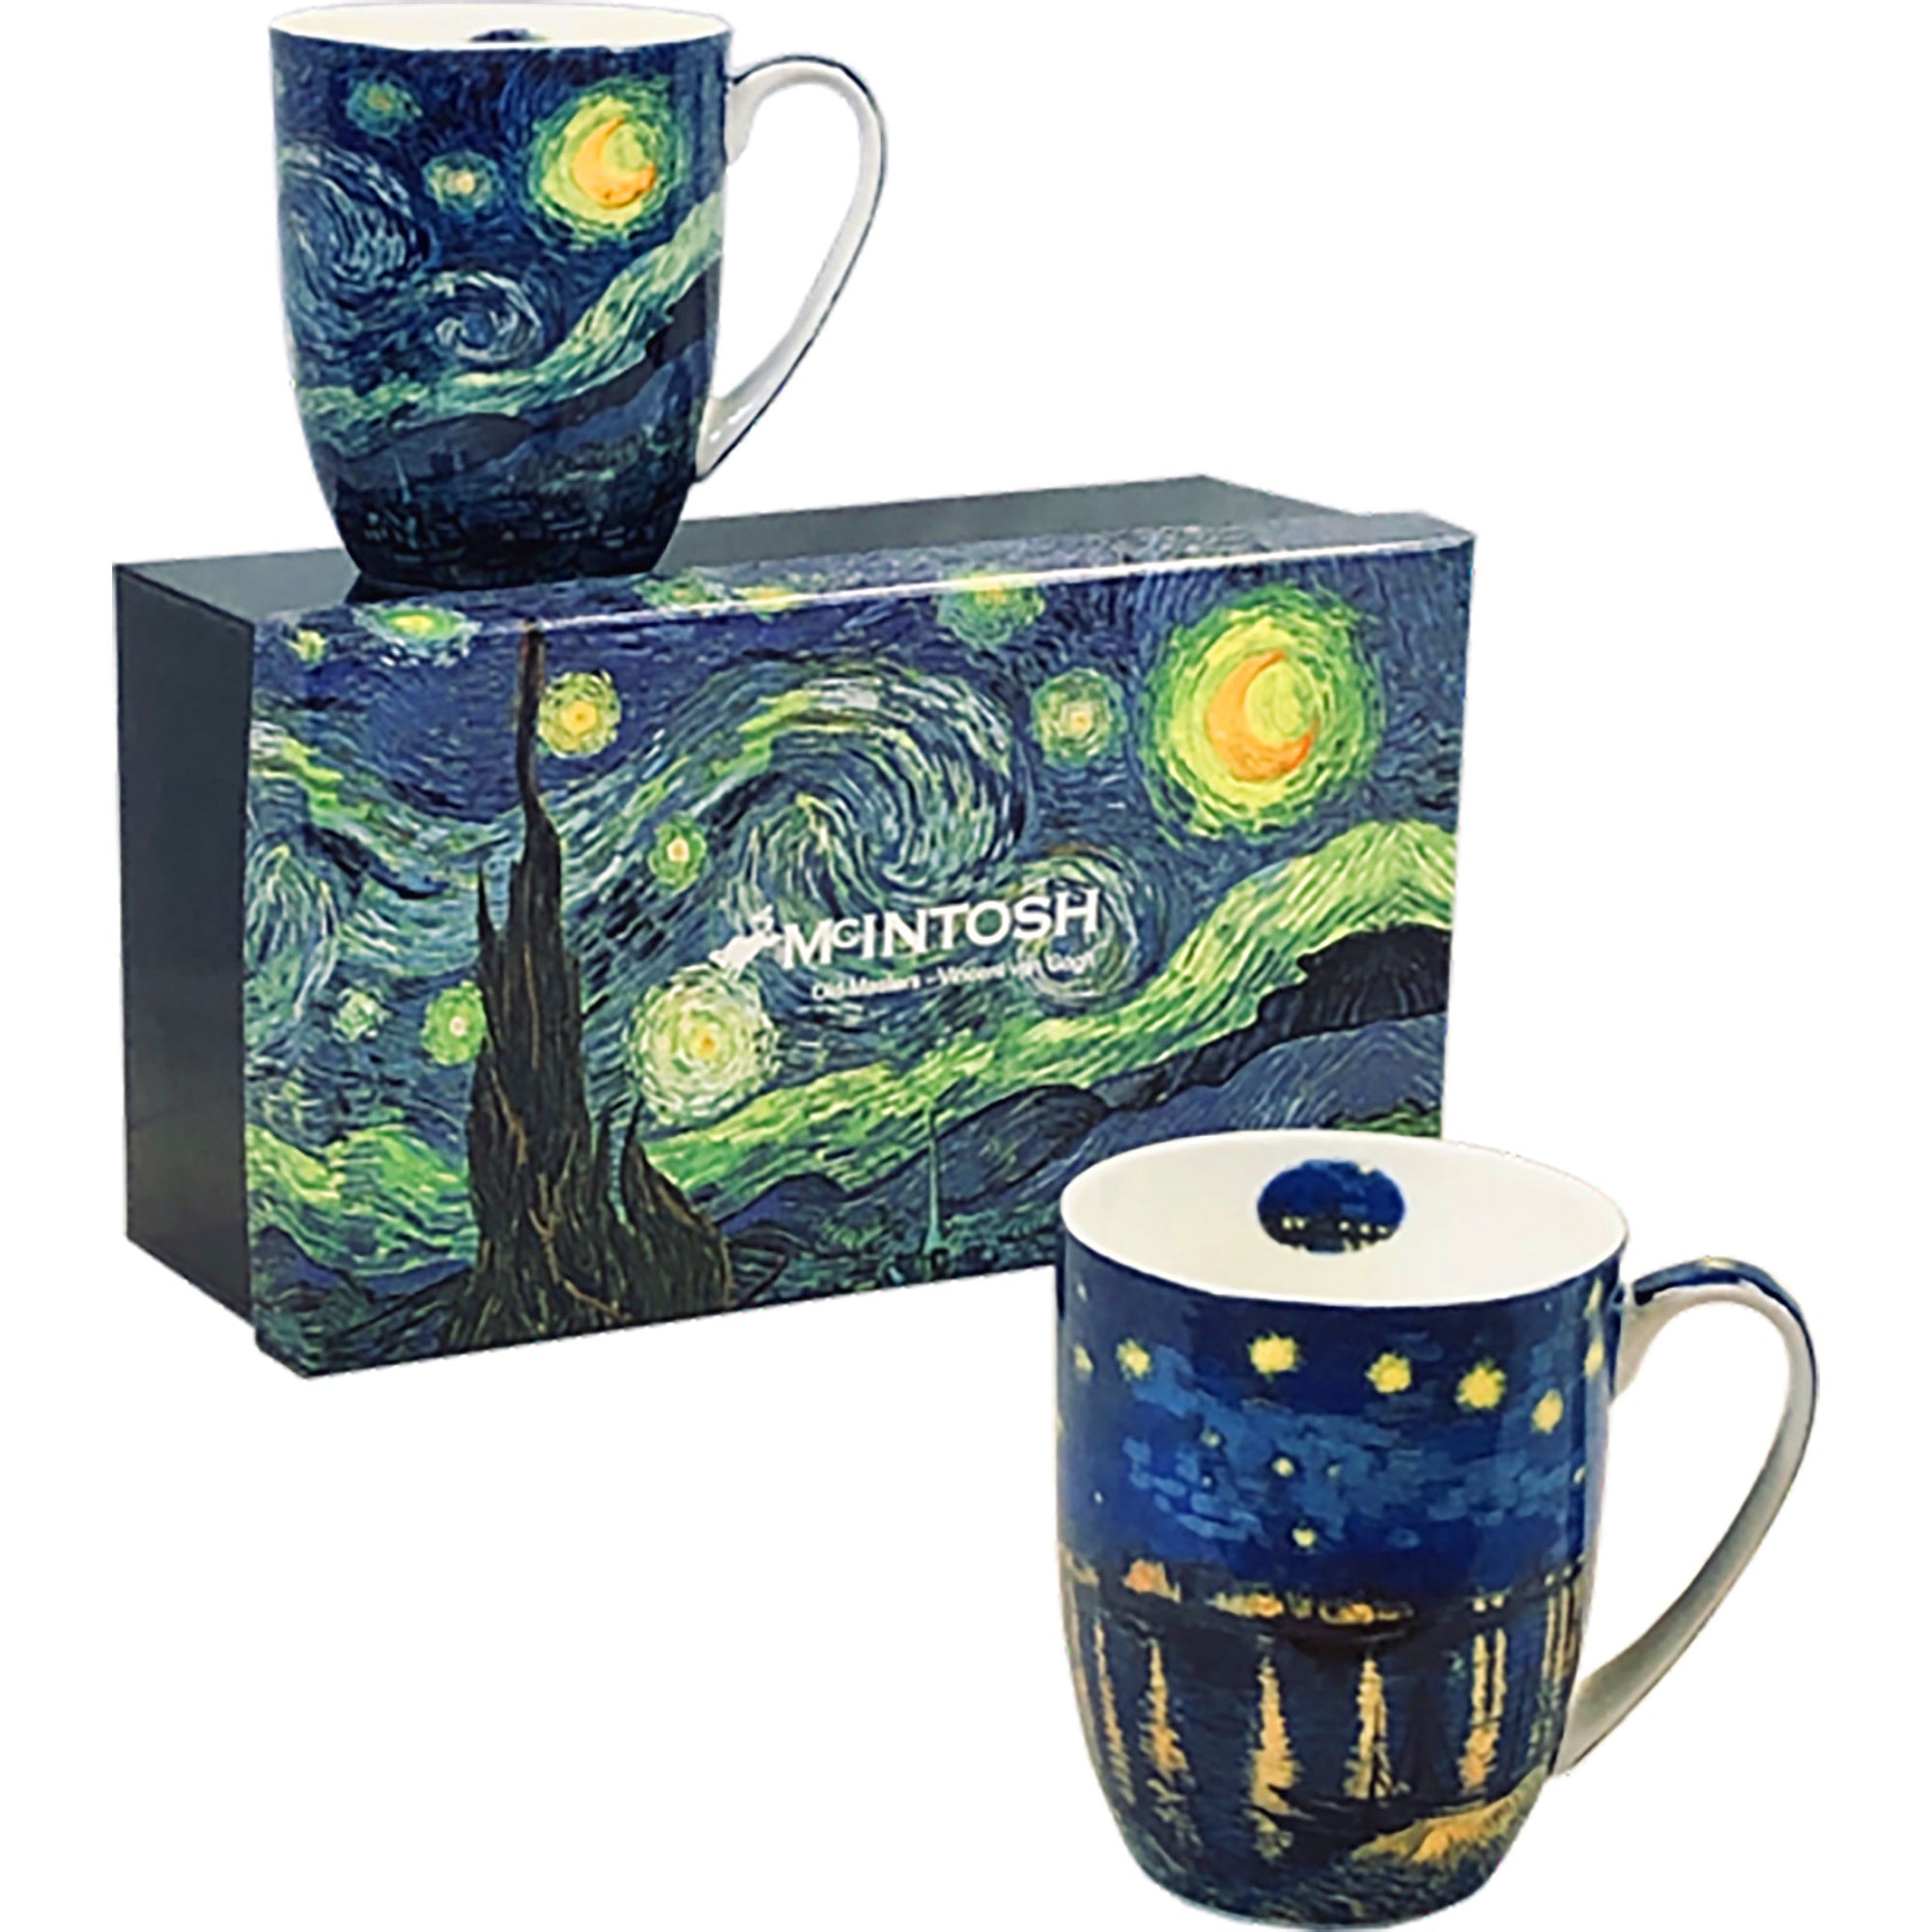 Van Gogh's Starry Nights Mug Pair | Getty Store